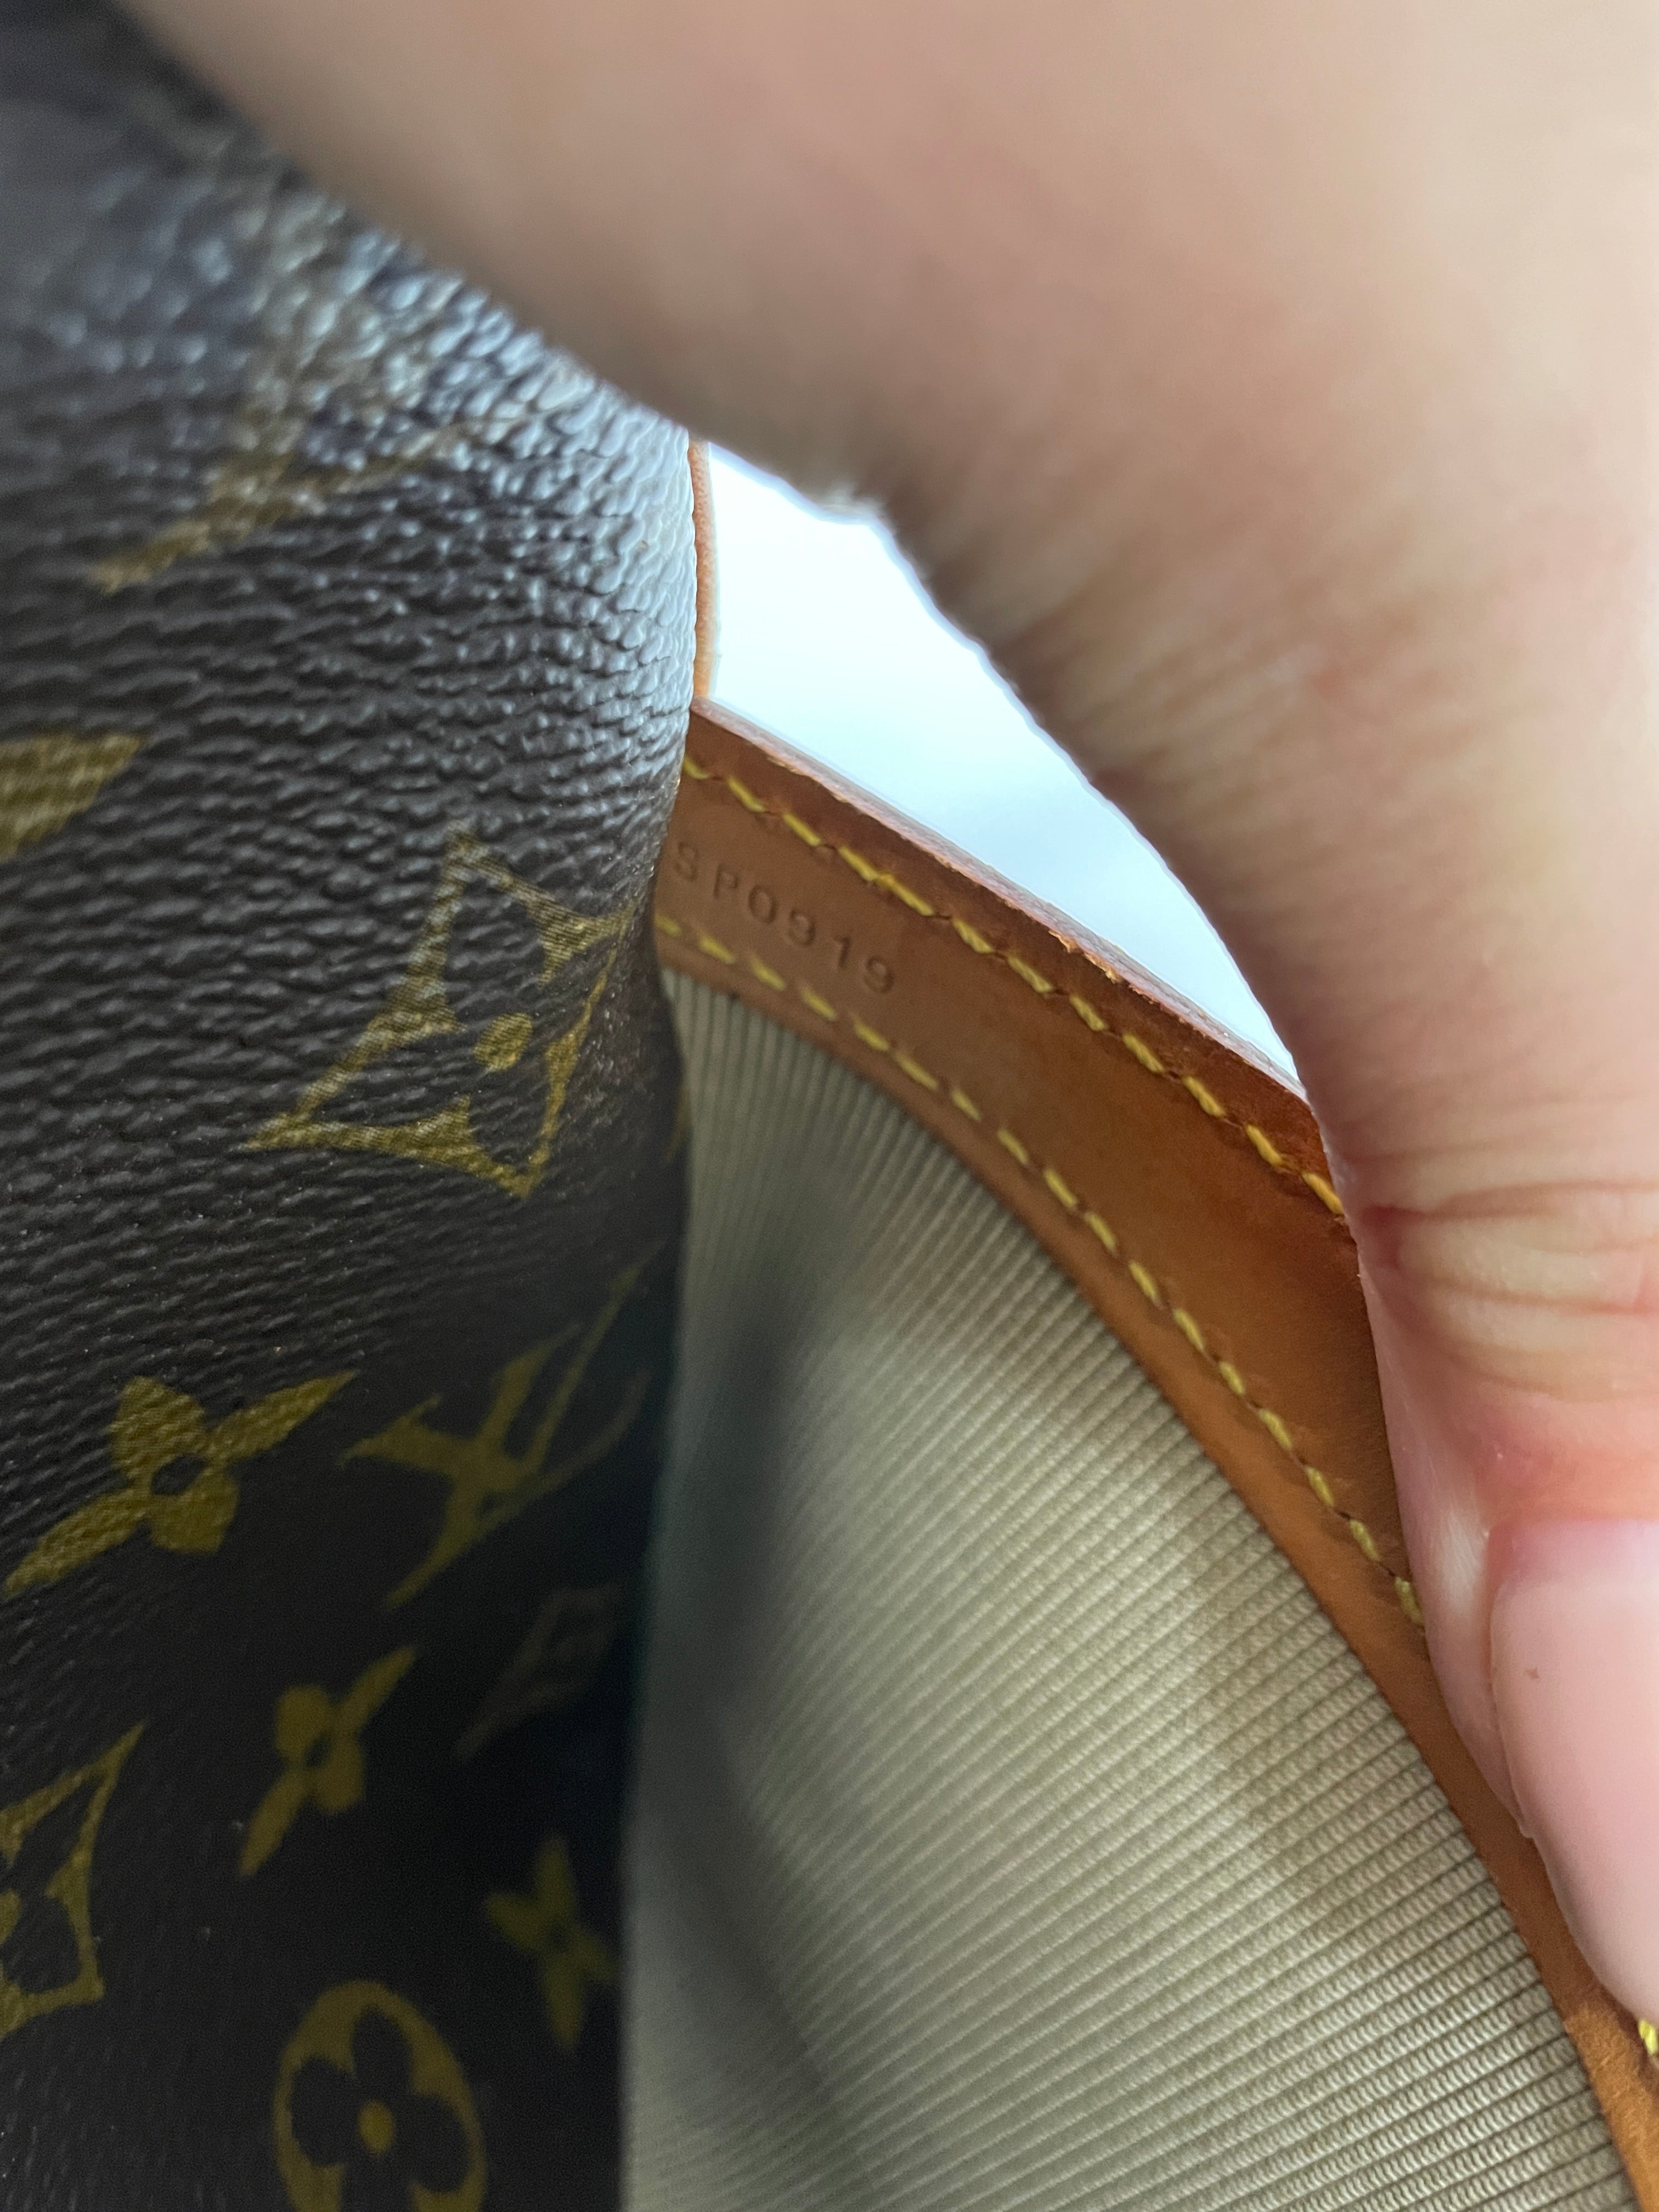 Louis Vuitton Reporter PM Shoulder Bag Used (7226)